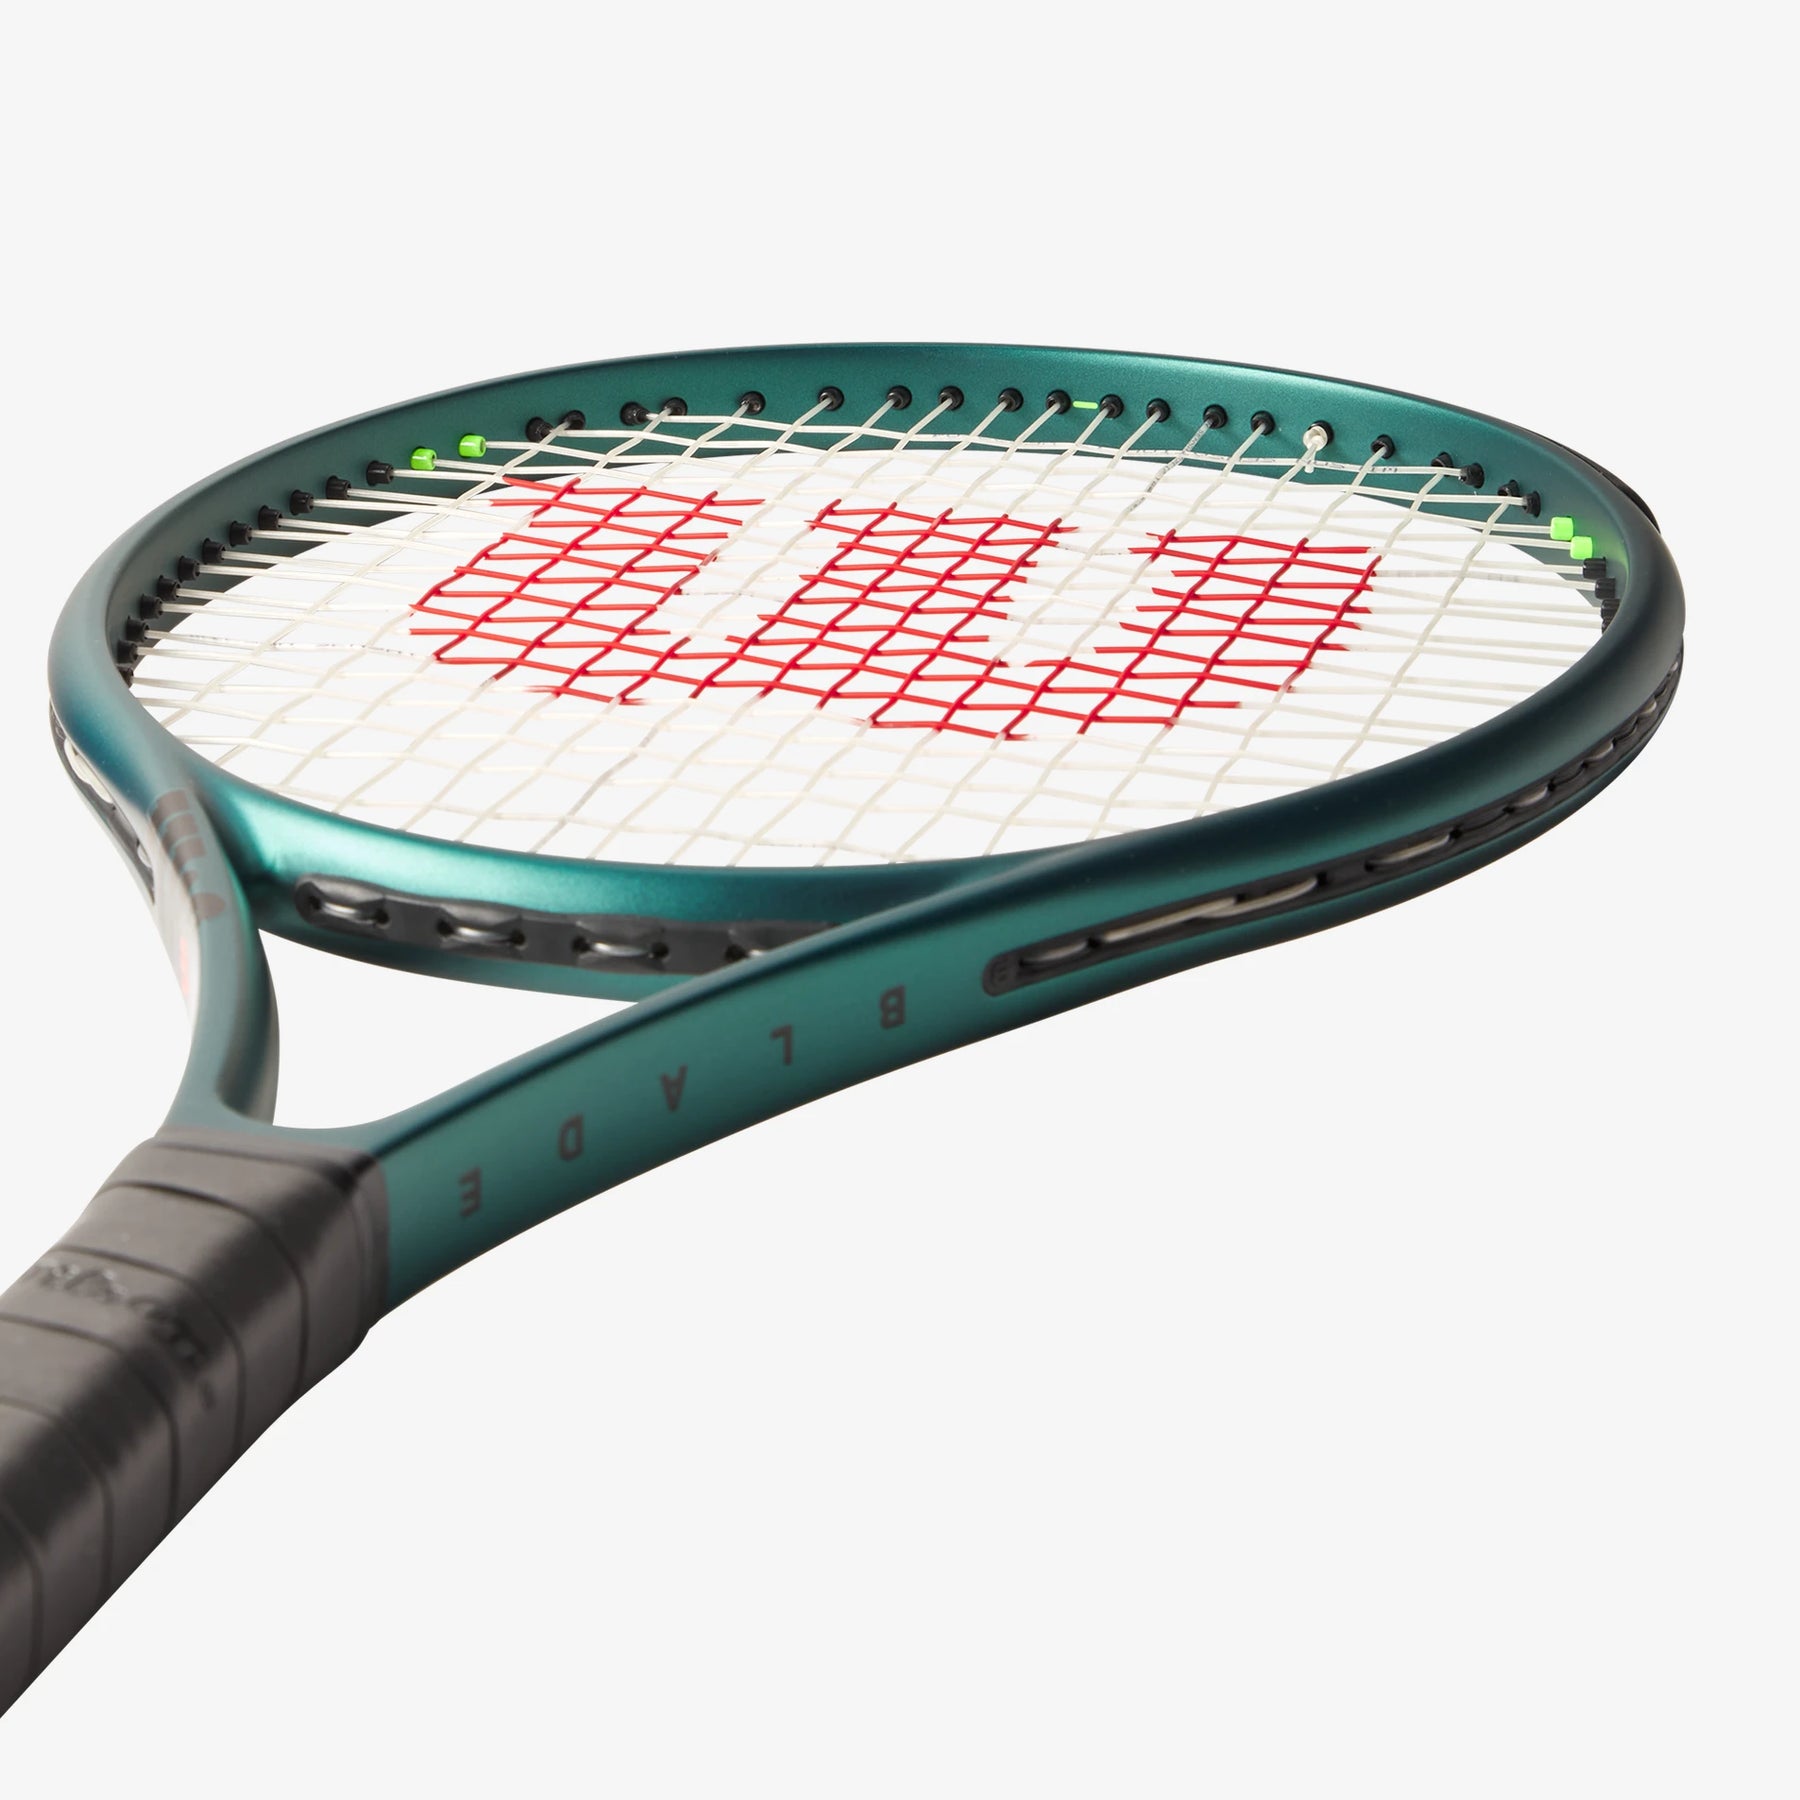 Wilson Blade 25 v9 Junior Tennis Racquet